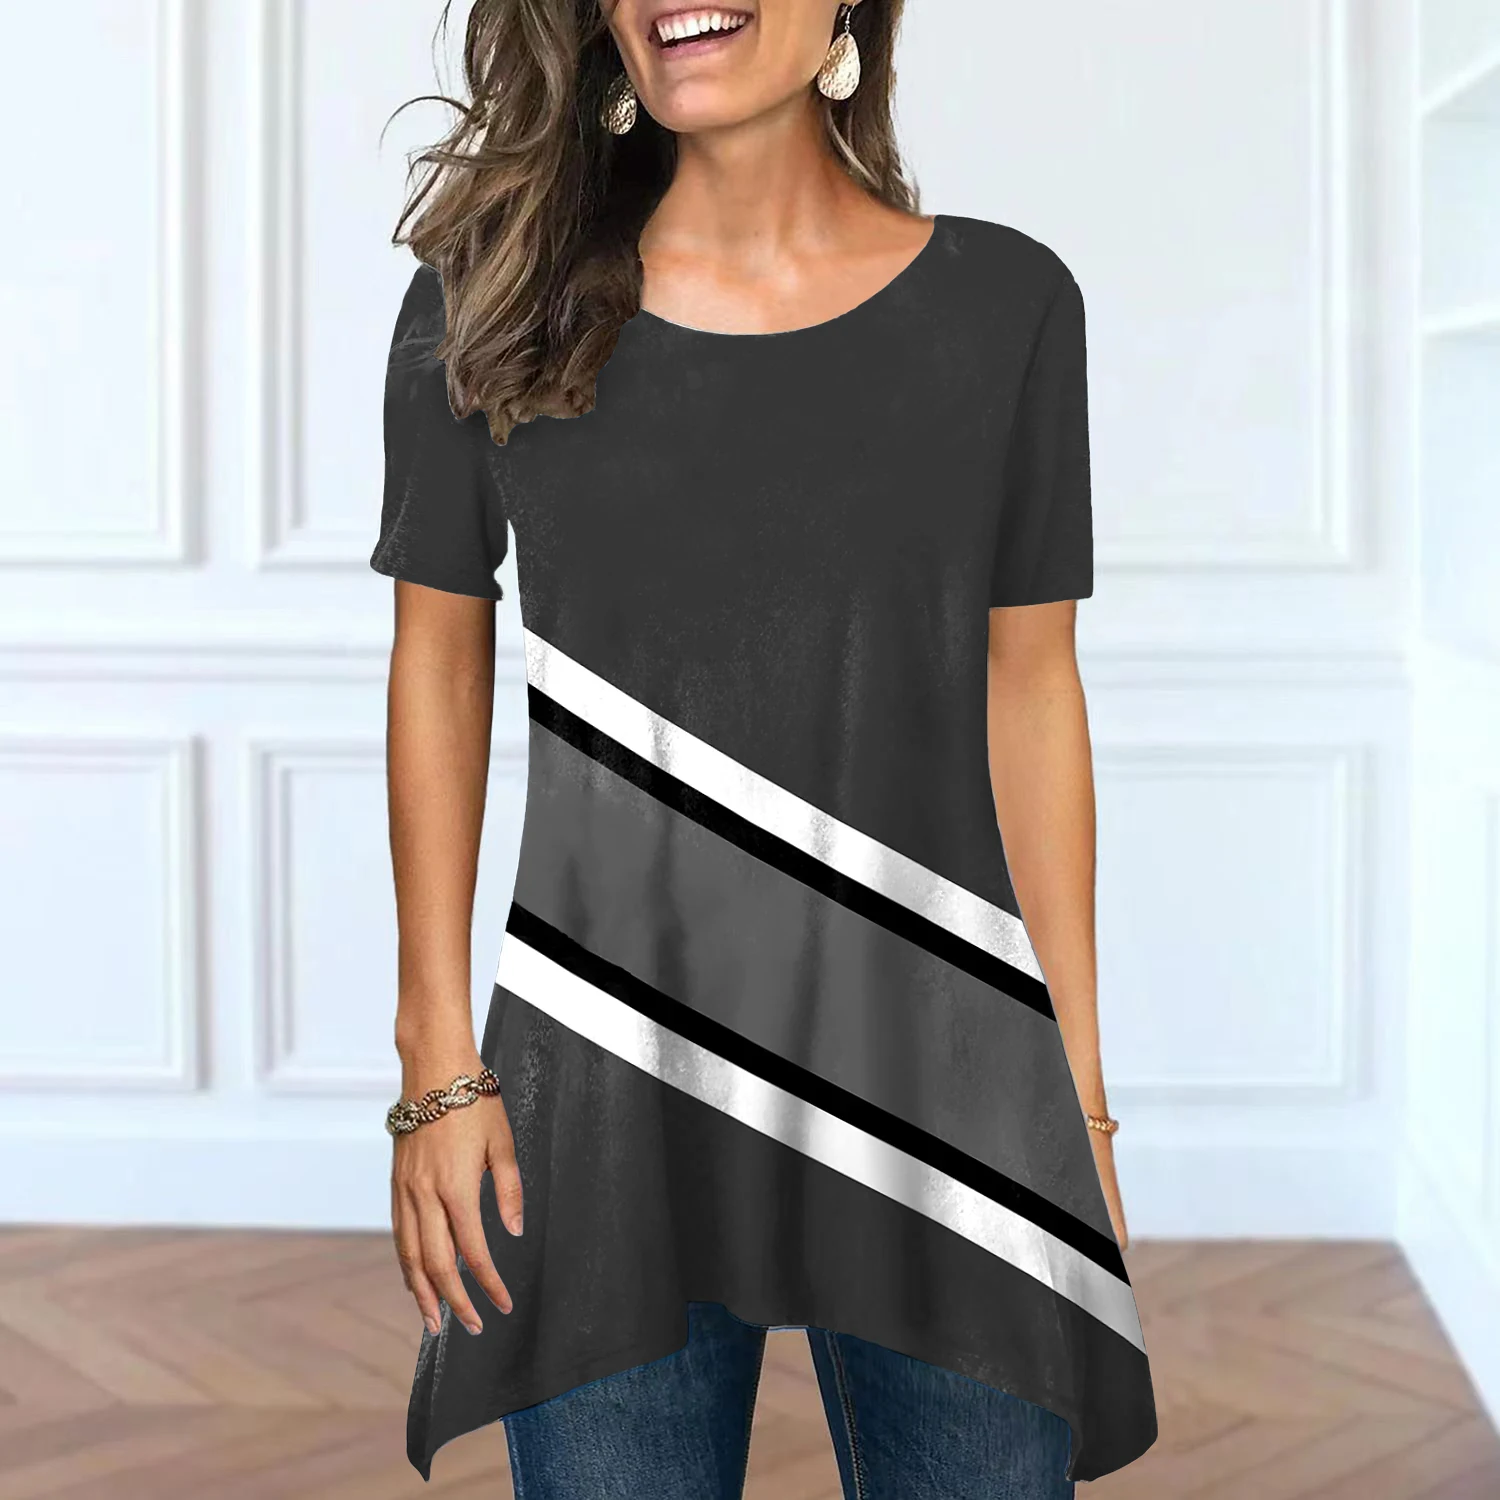 Yeni T-Shirt Graphics 3D Dimi Yolu Baskı T-shirt Kadınlar O boyun boyunlu Kısa Kollu Giyim Gömlek Spor Ürün Üst XS-8XL